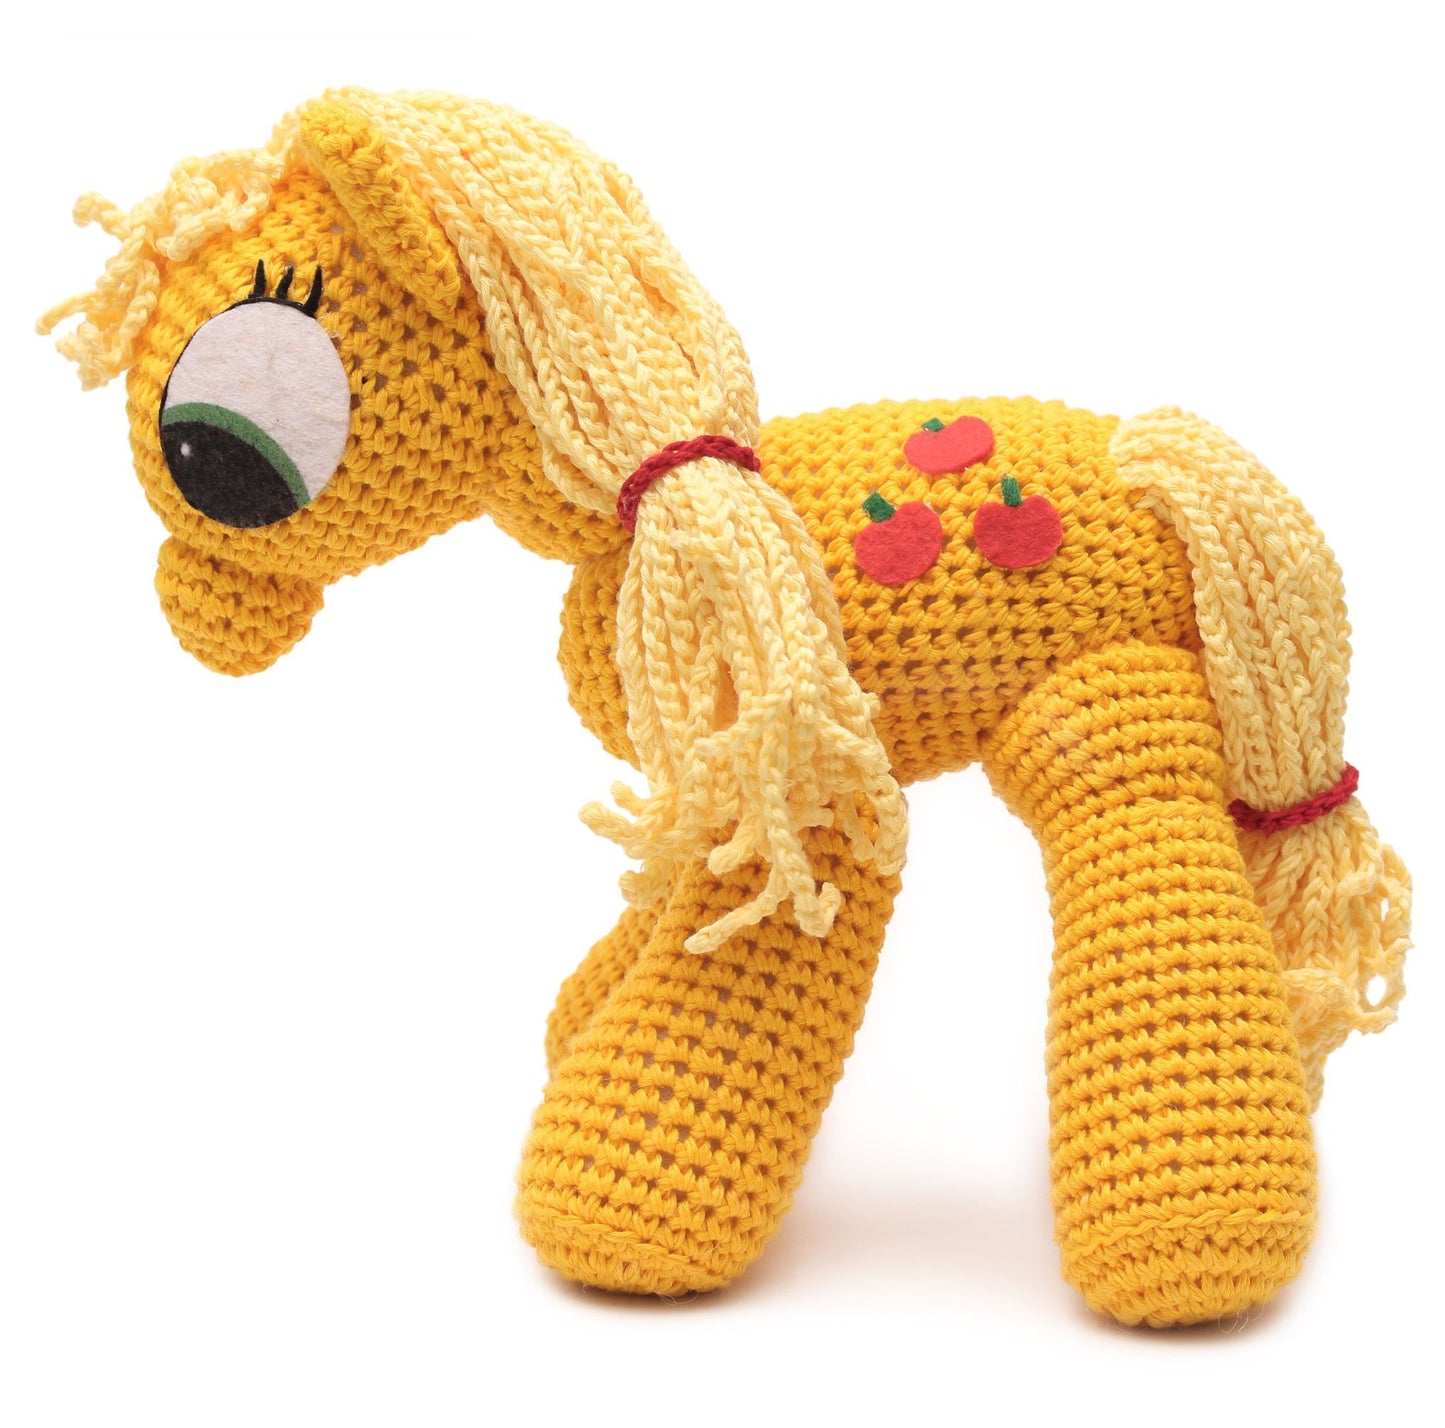 Applejack Pony Handmade Amigurumi Stuffed Toy Knit Crochet Doll VAC